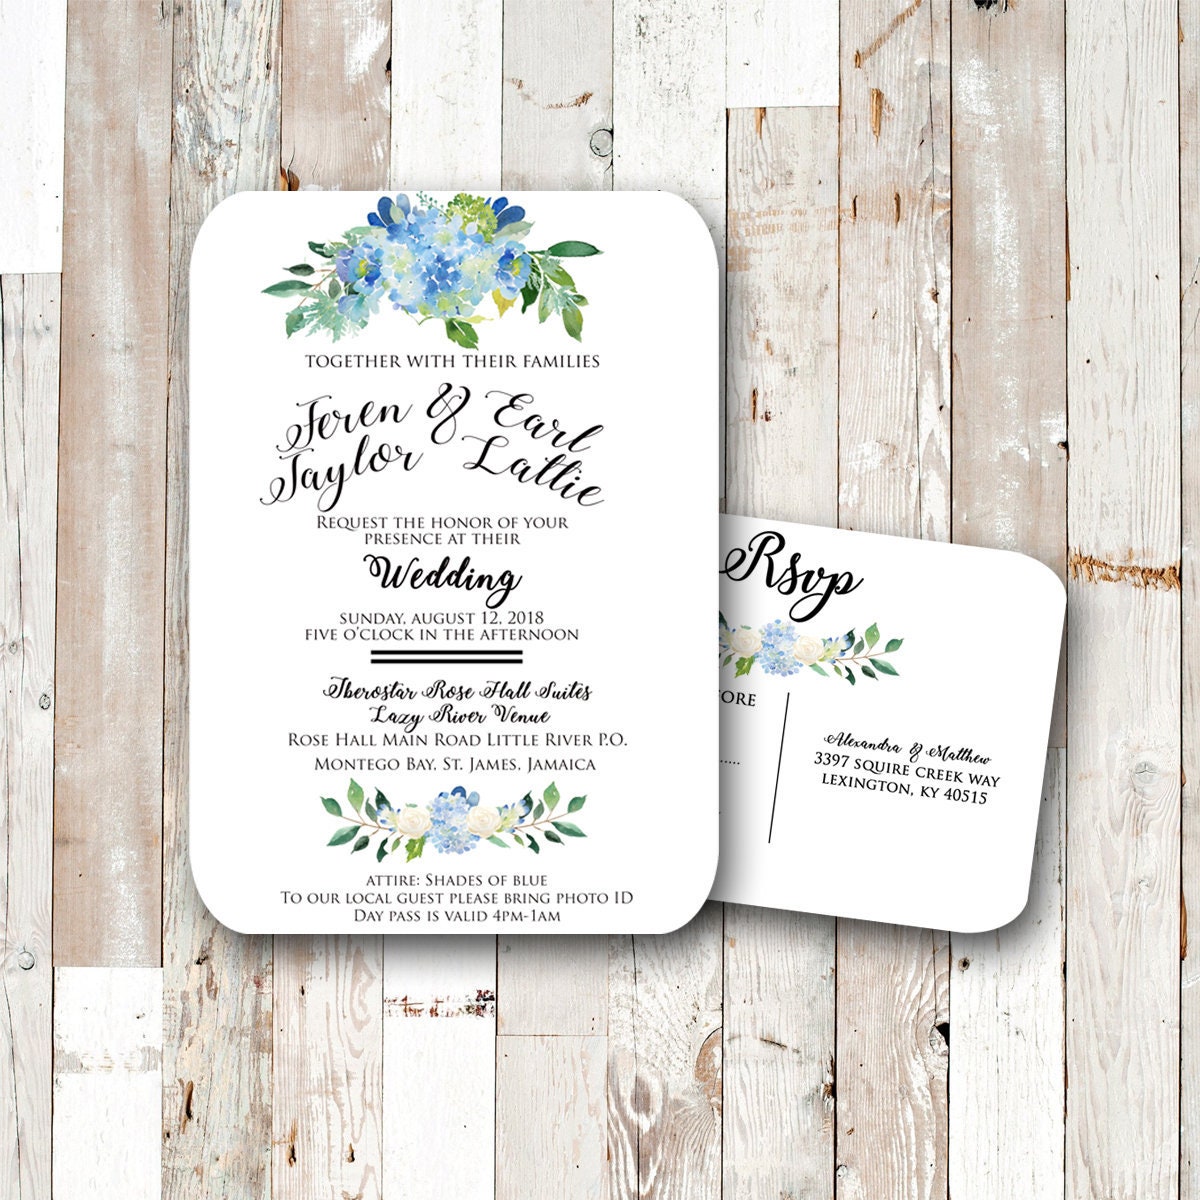 Blue Hydrangea Wedding Invitations, Shades of Blue, Summer Wedding, Romantic Wedding, Floral Wedding, Country Wedding Invitations, Blue